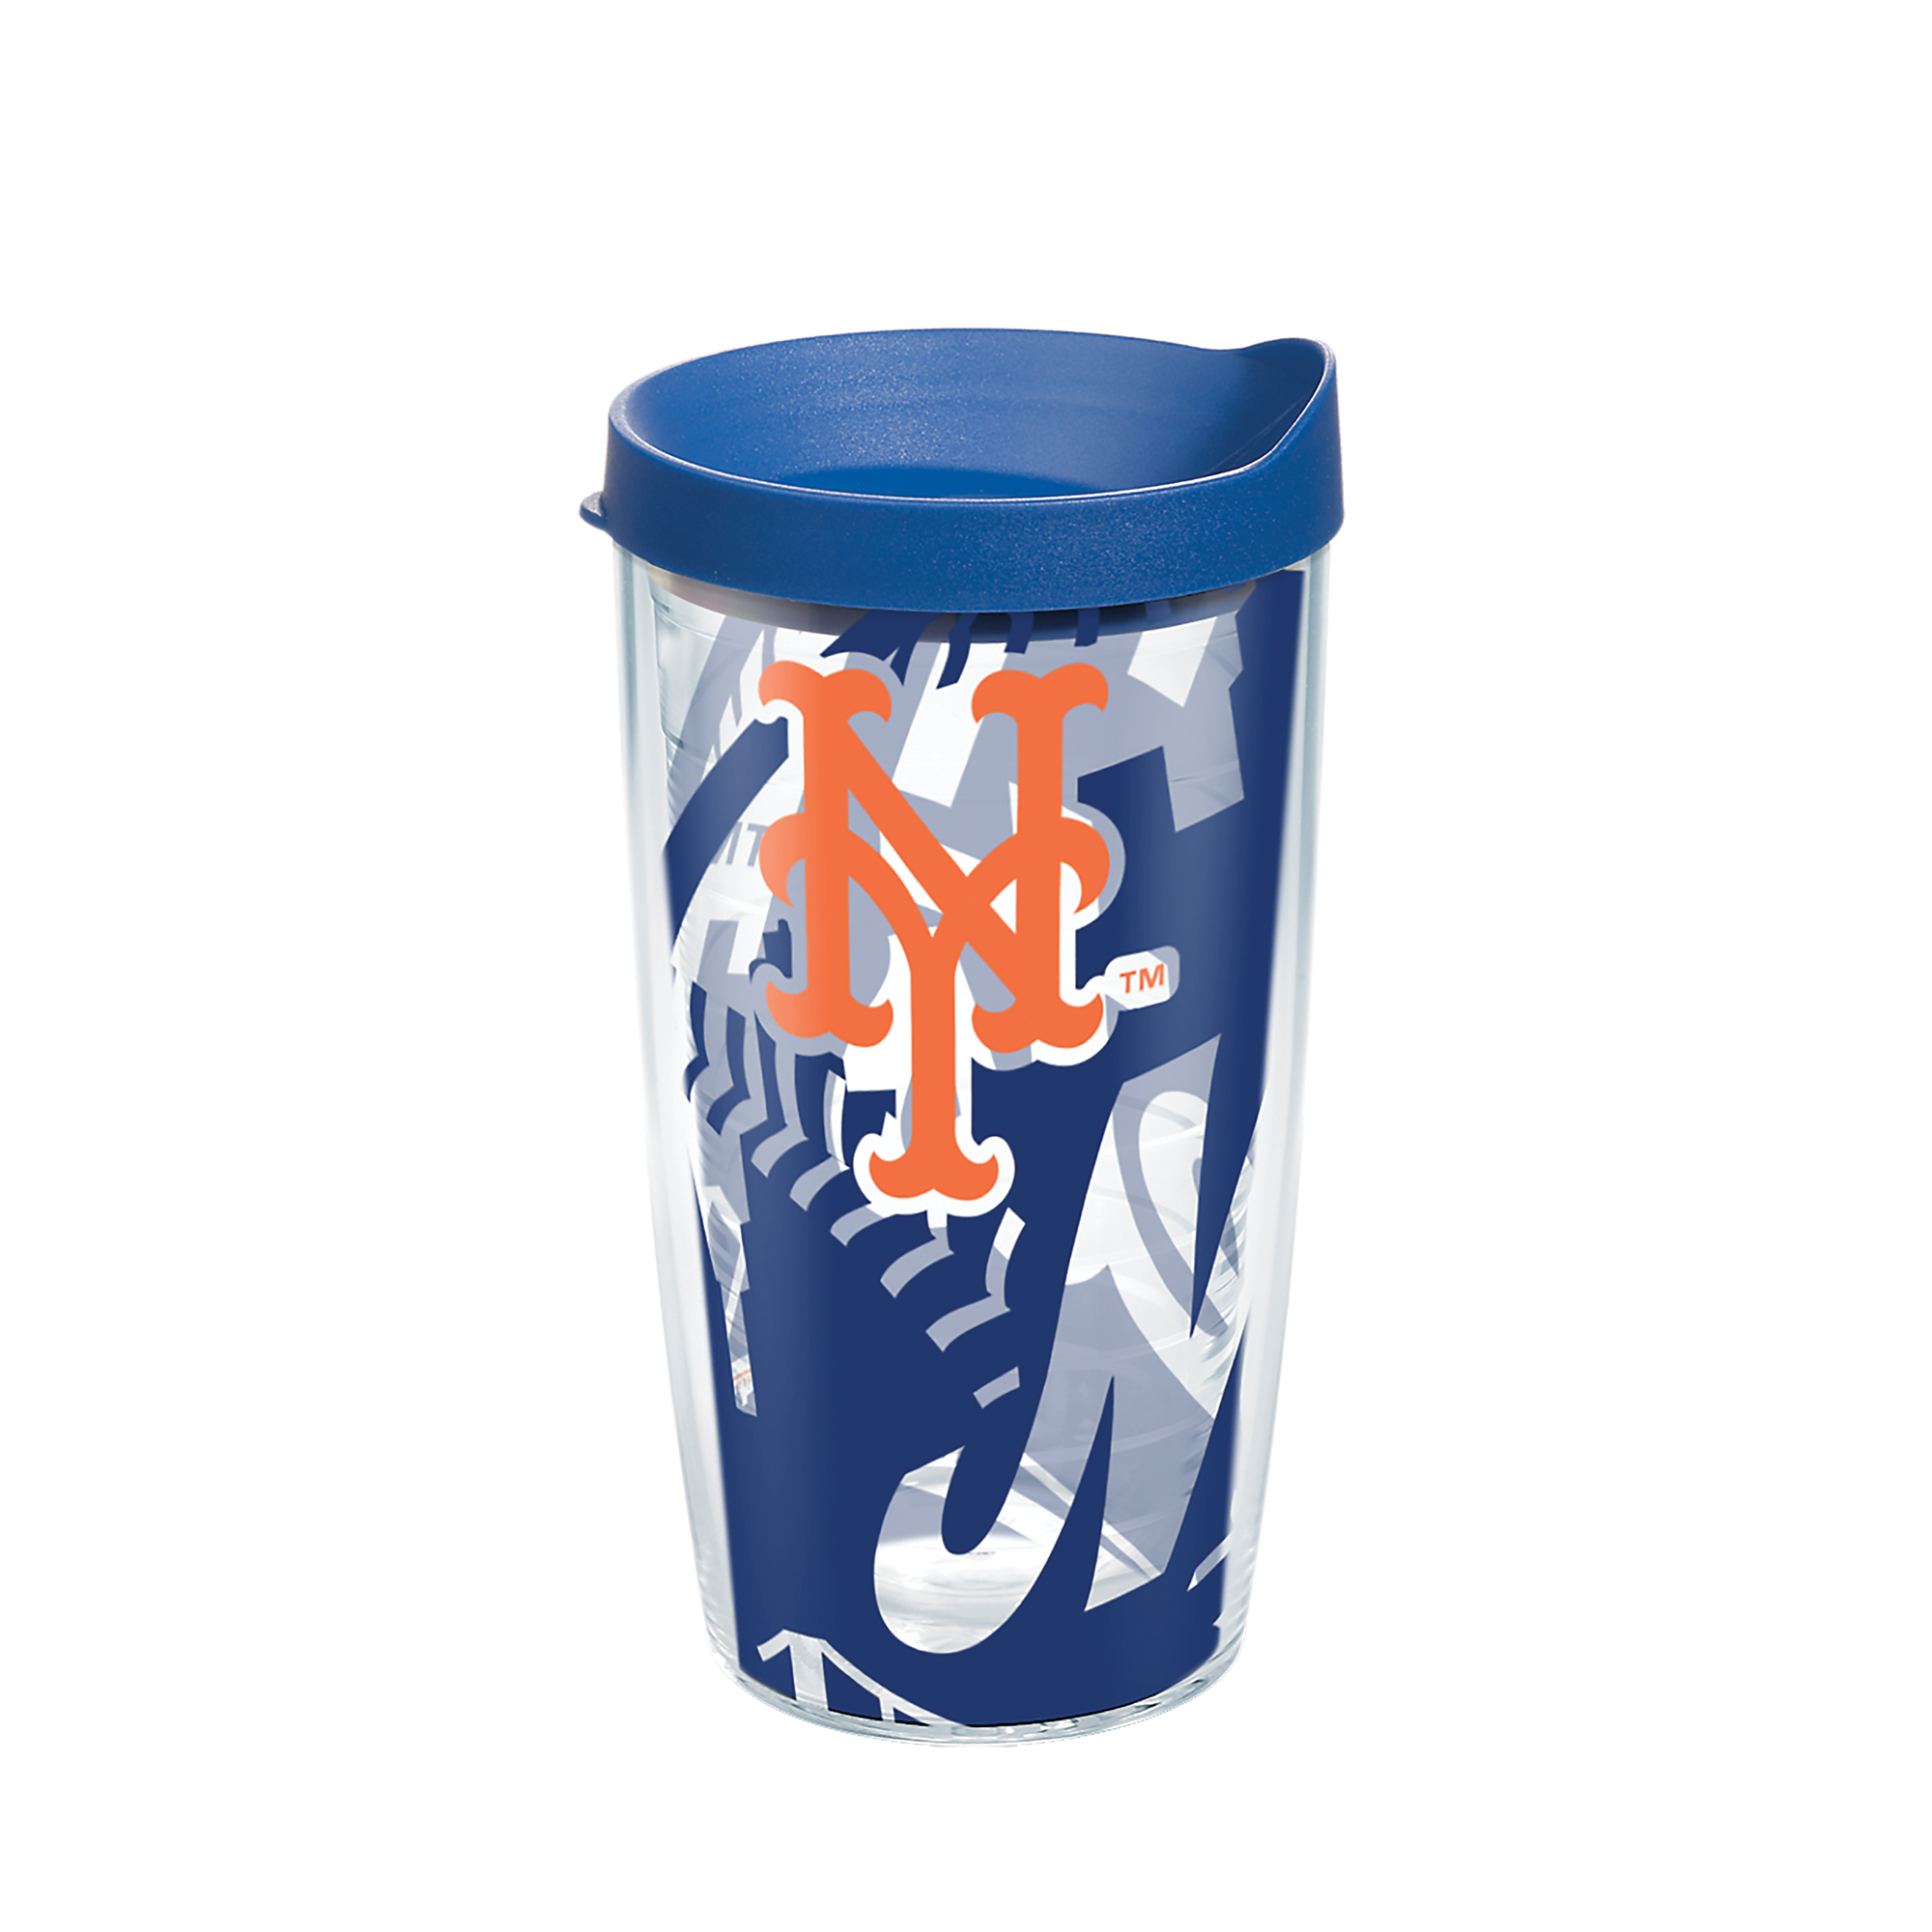 MLB New York Mets Genuine 16 oz Tumbler with lid - image 1 of 2